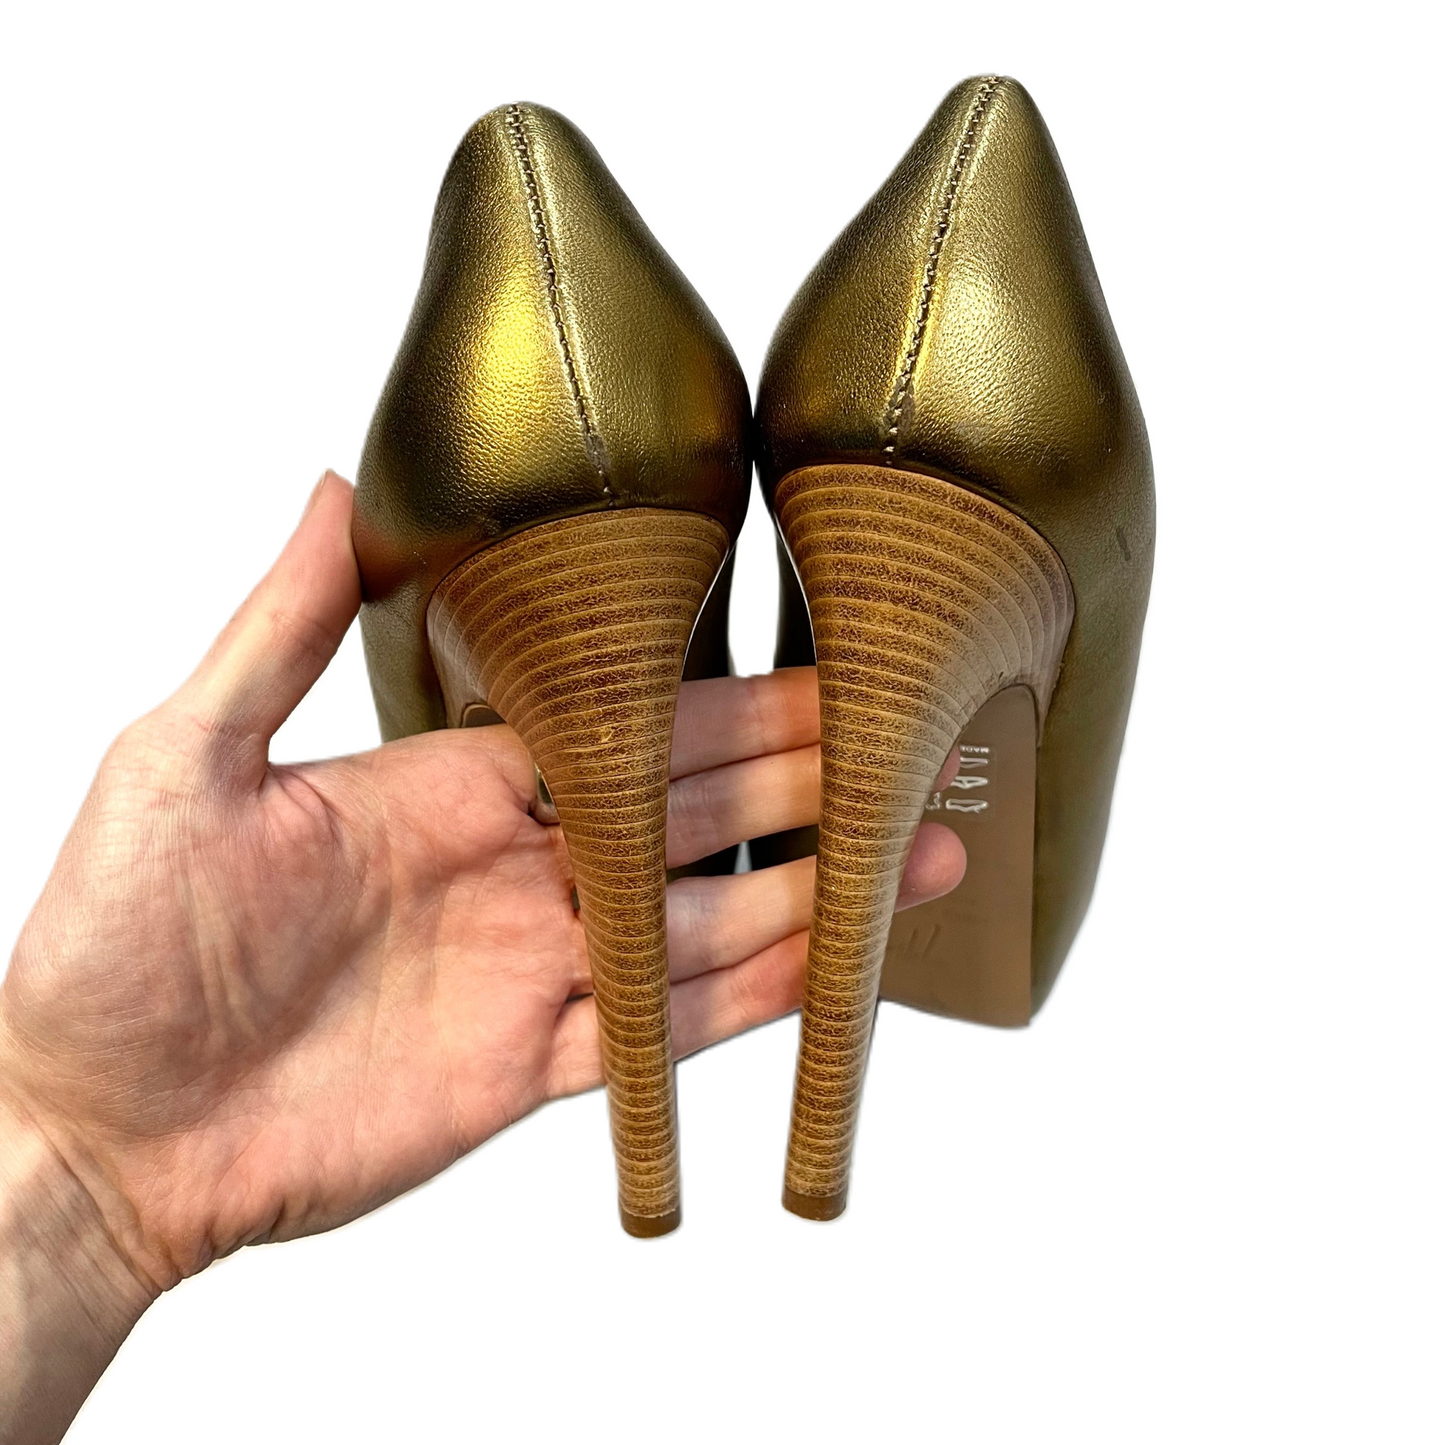 Bronze Shoes Luxury Designer By Giuseppe Zanotti, Size: 8